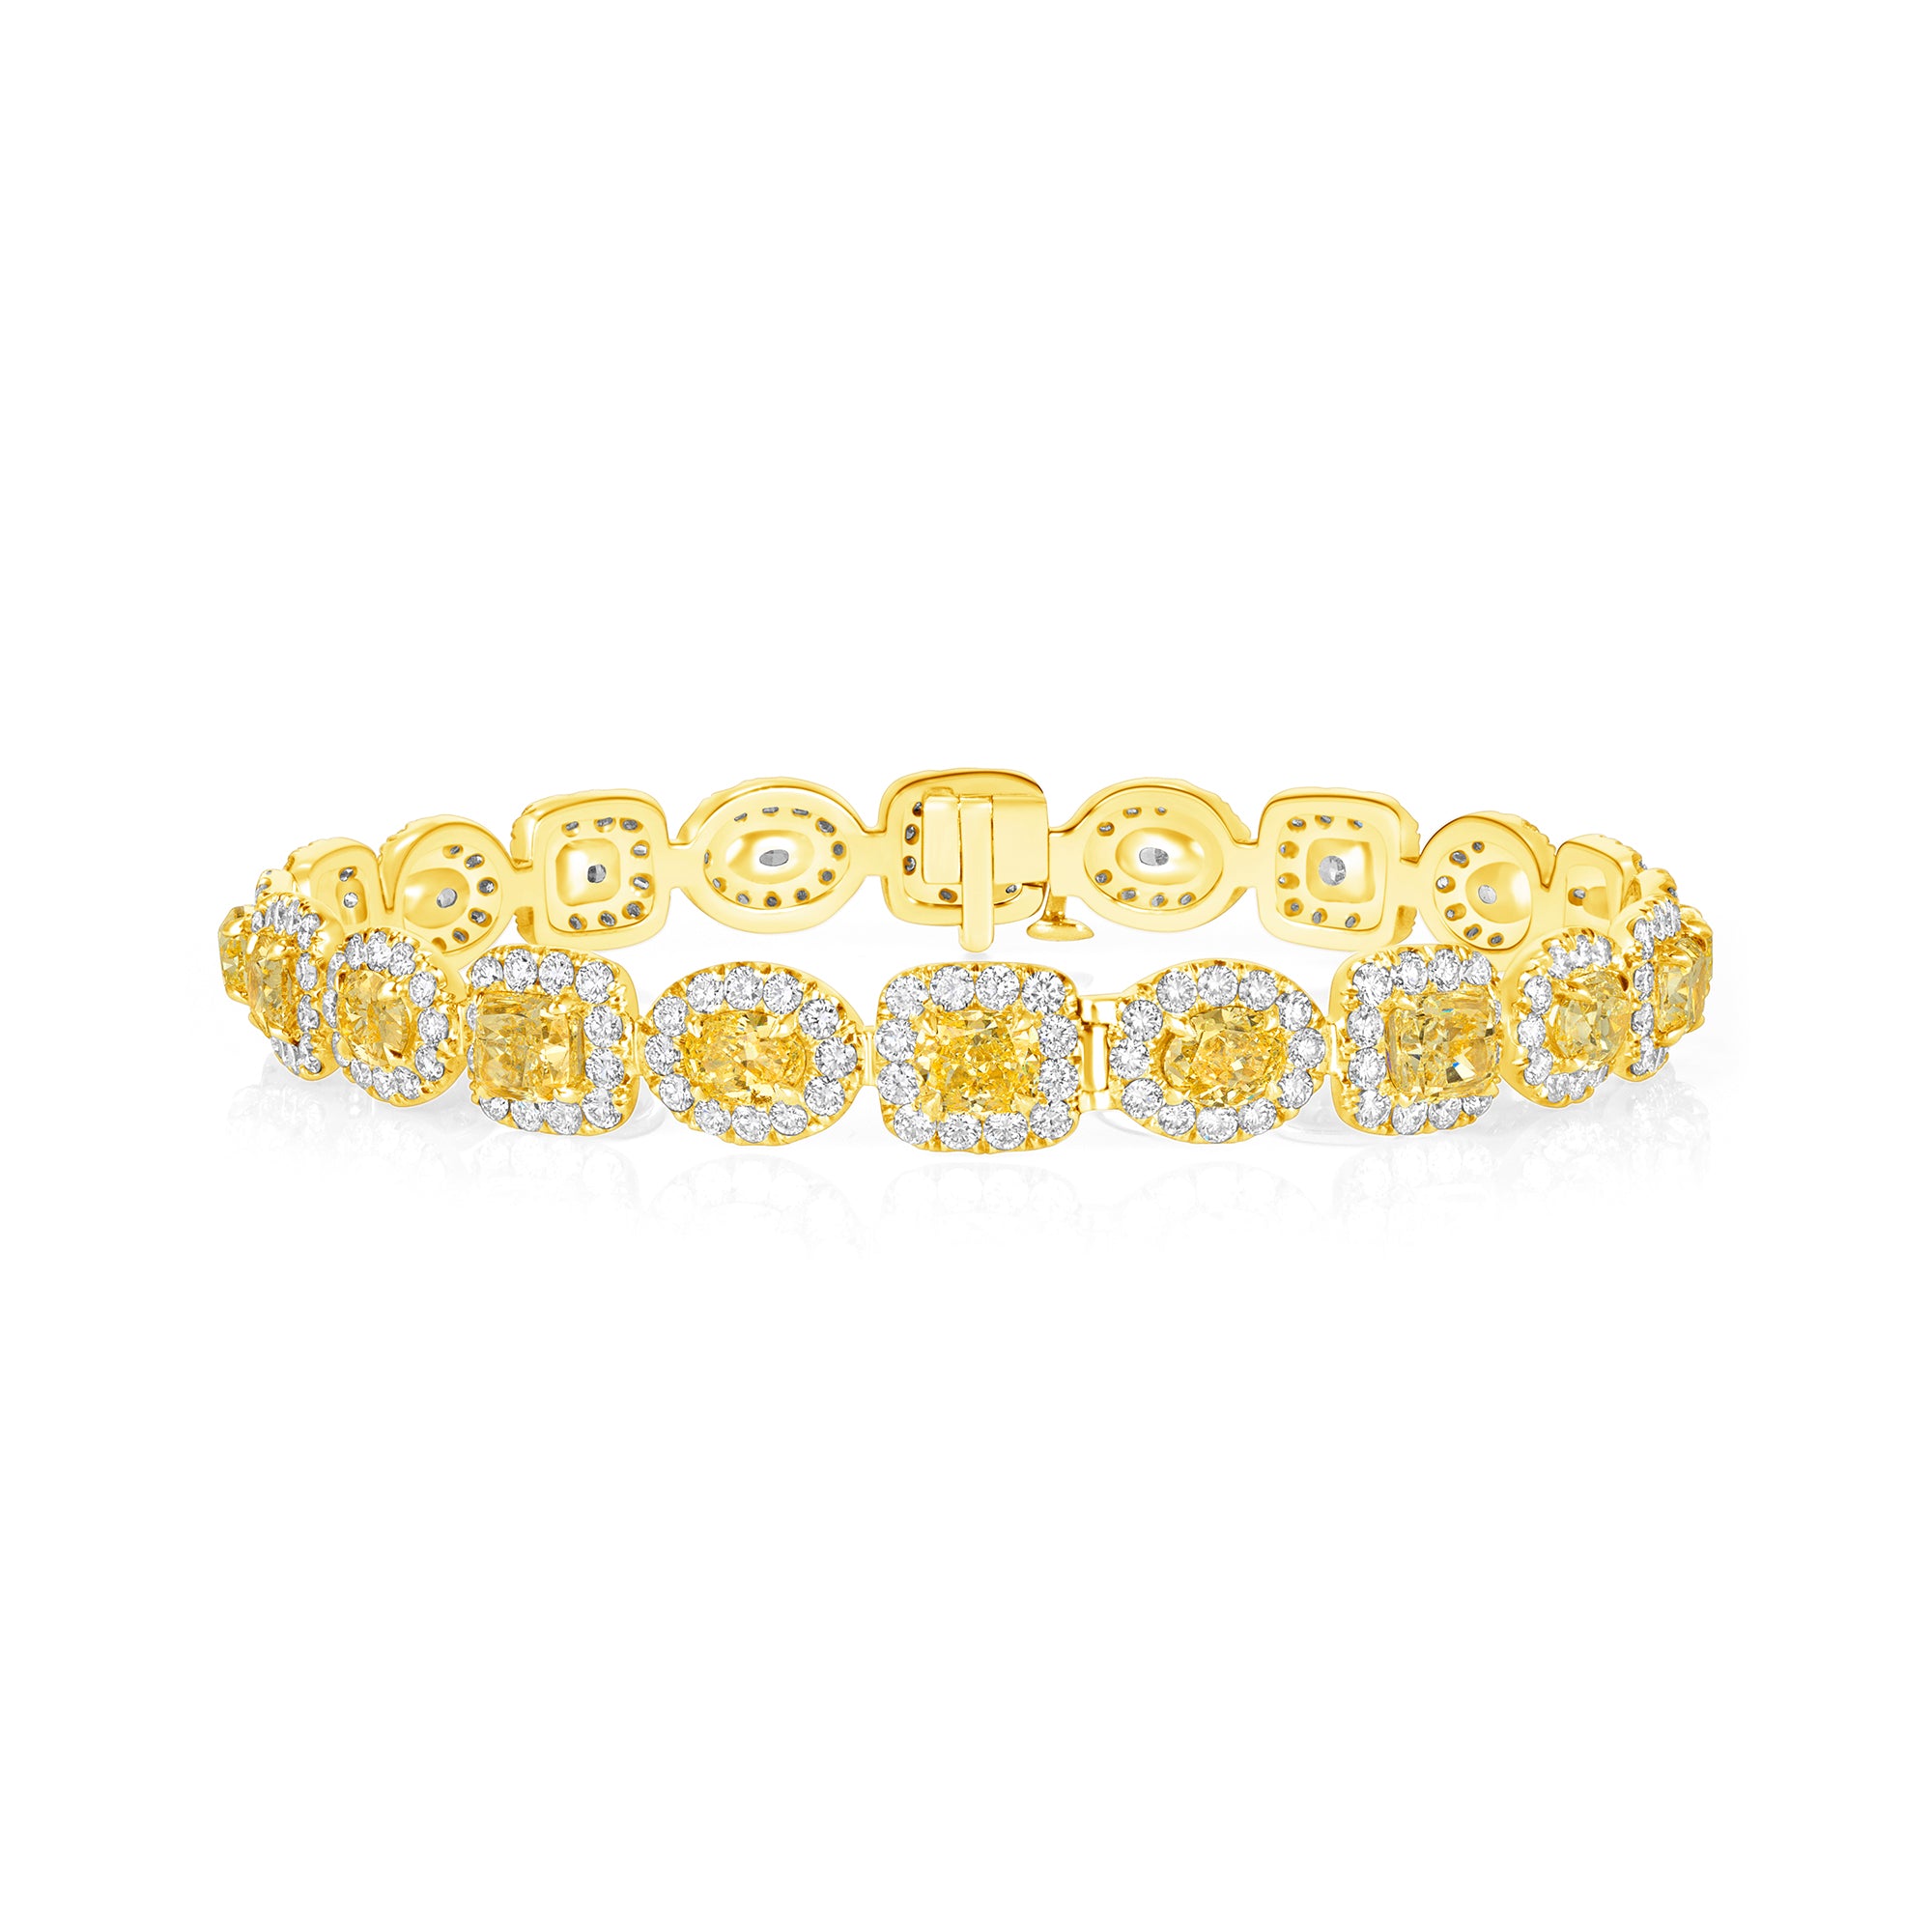 Mixed Cut Fancy Yellow Diamond Bracelet in 18 Karat Yellow Gold